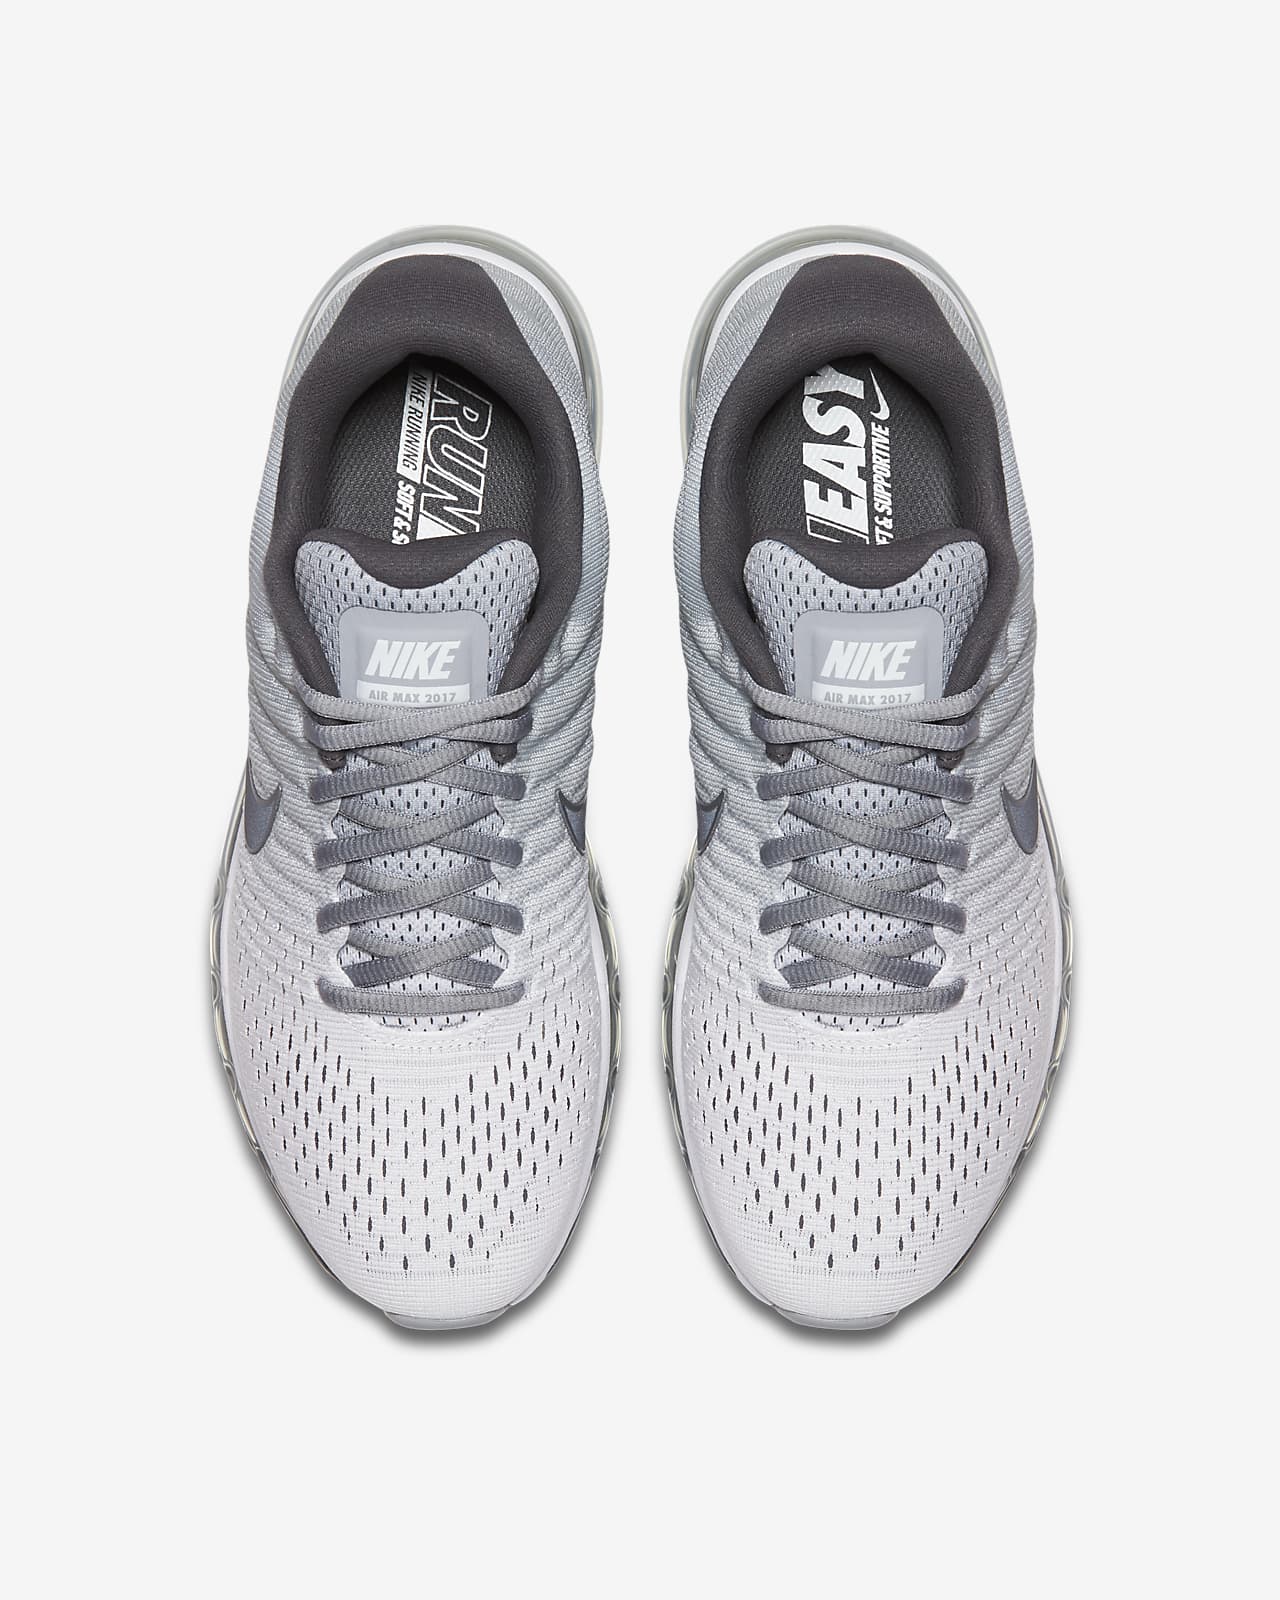 Grind Reliable unlock Nike Air Max 2017 Men's Shoes. Nike.com